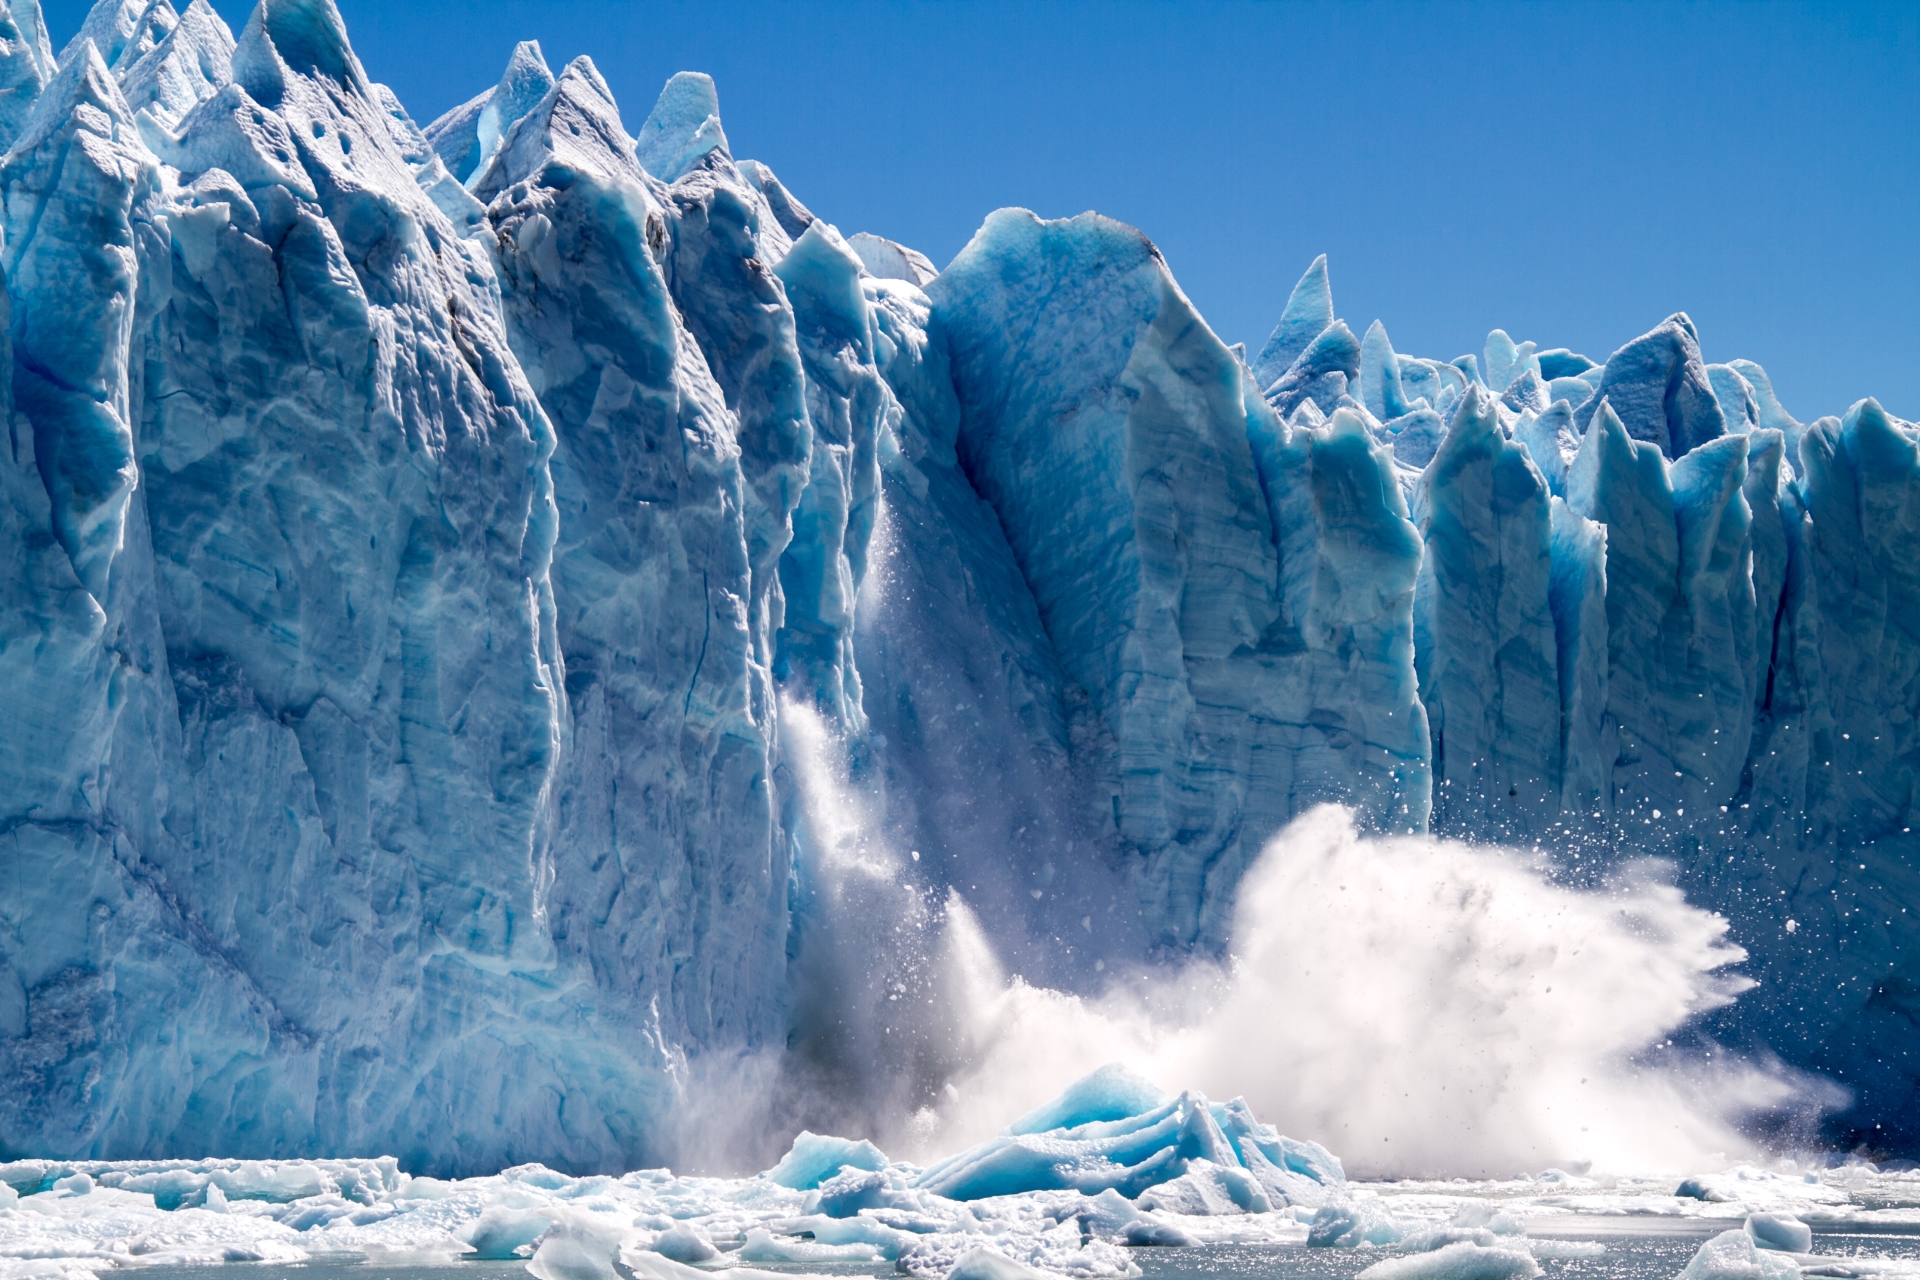 Perito Moreno glacier - Patagonia by land & sea